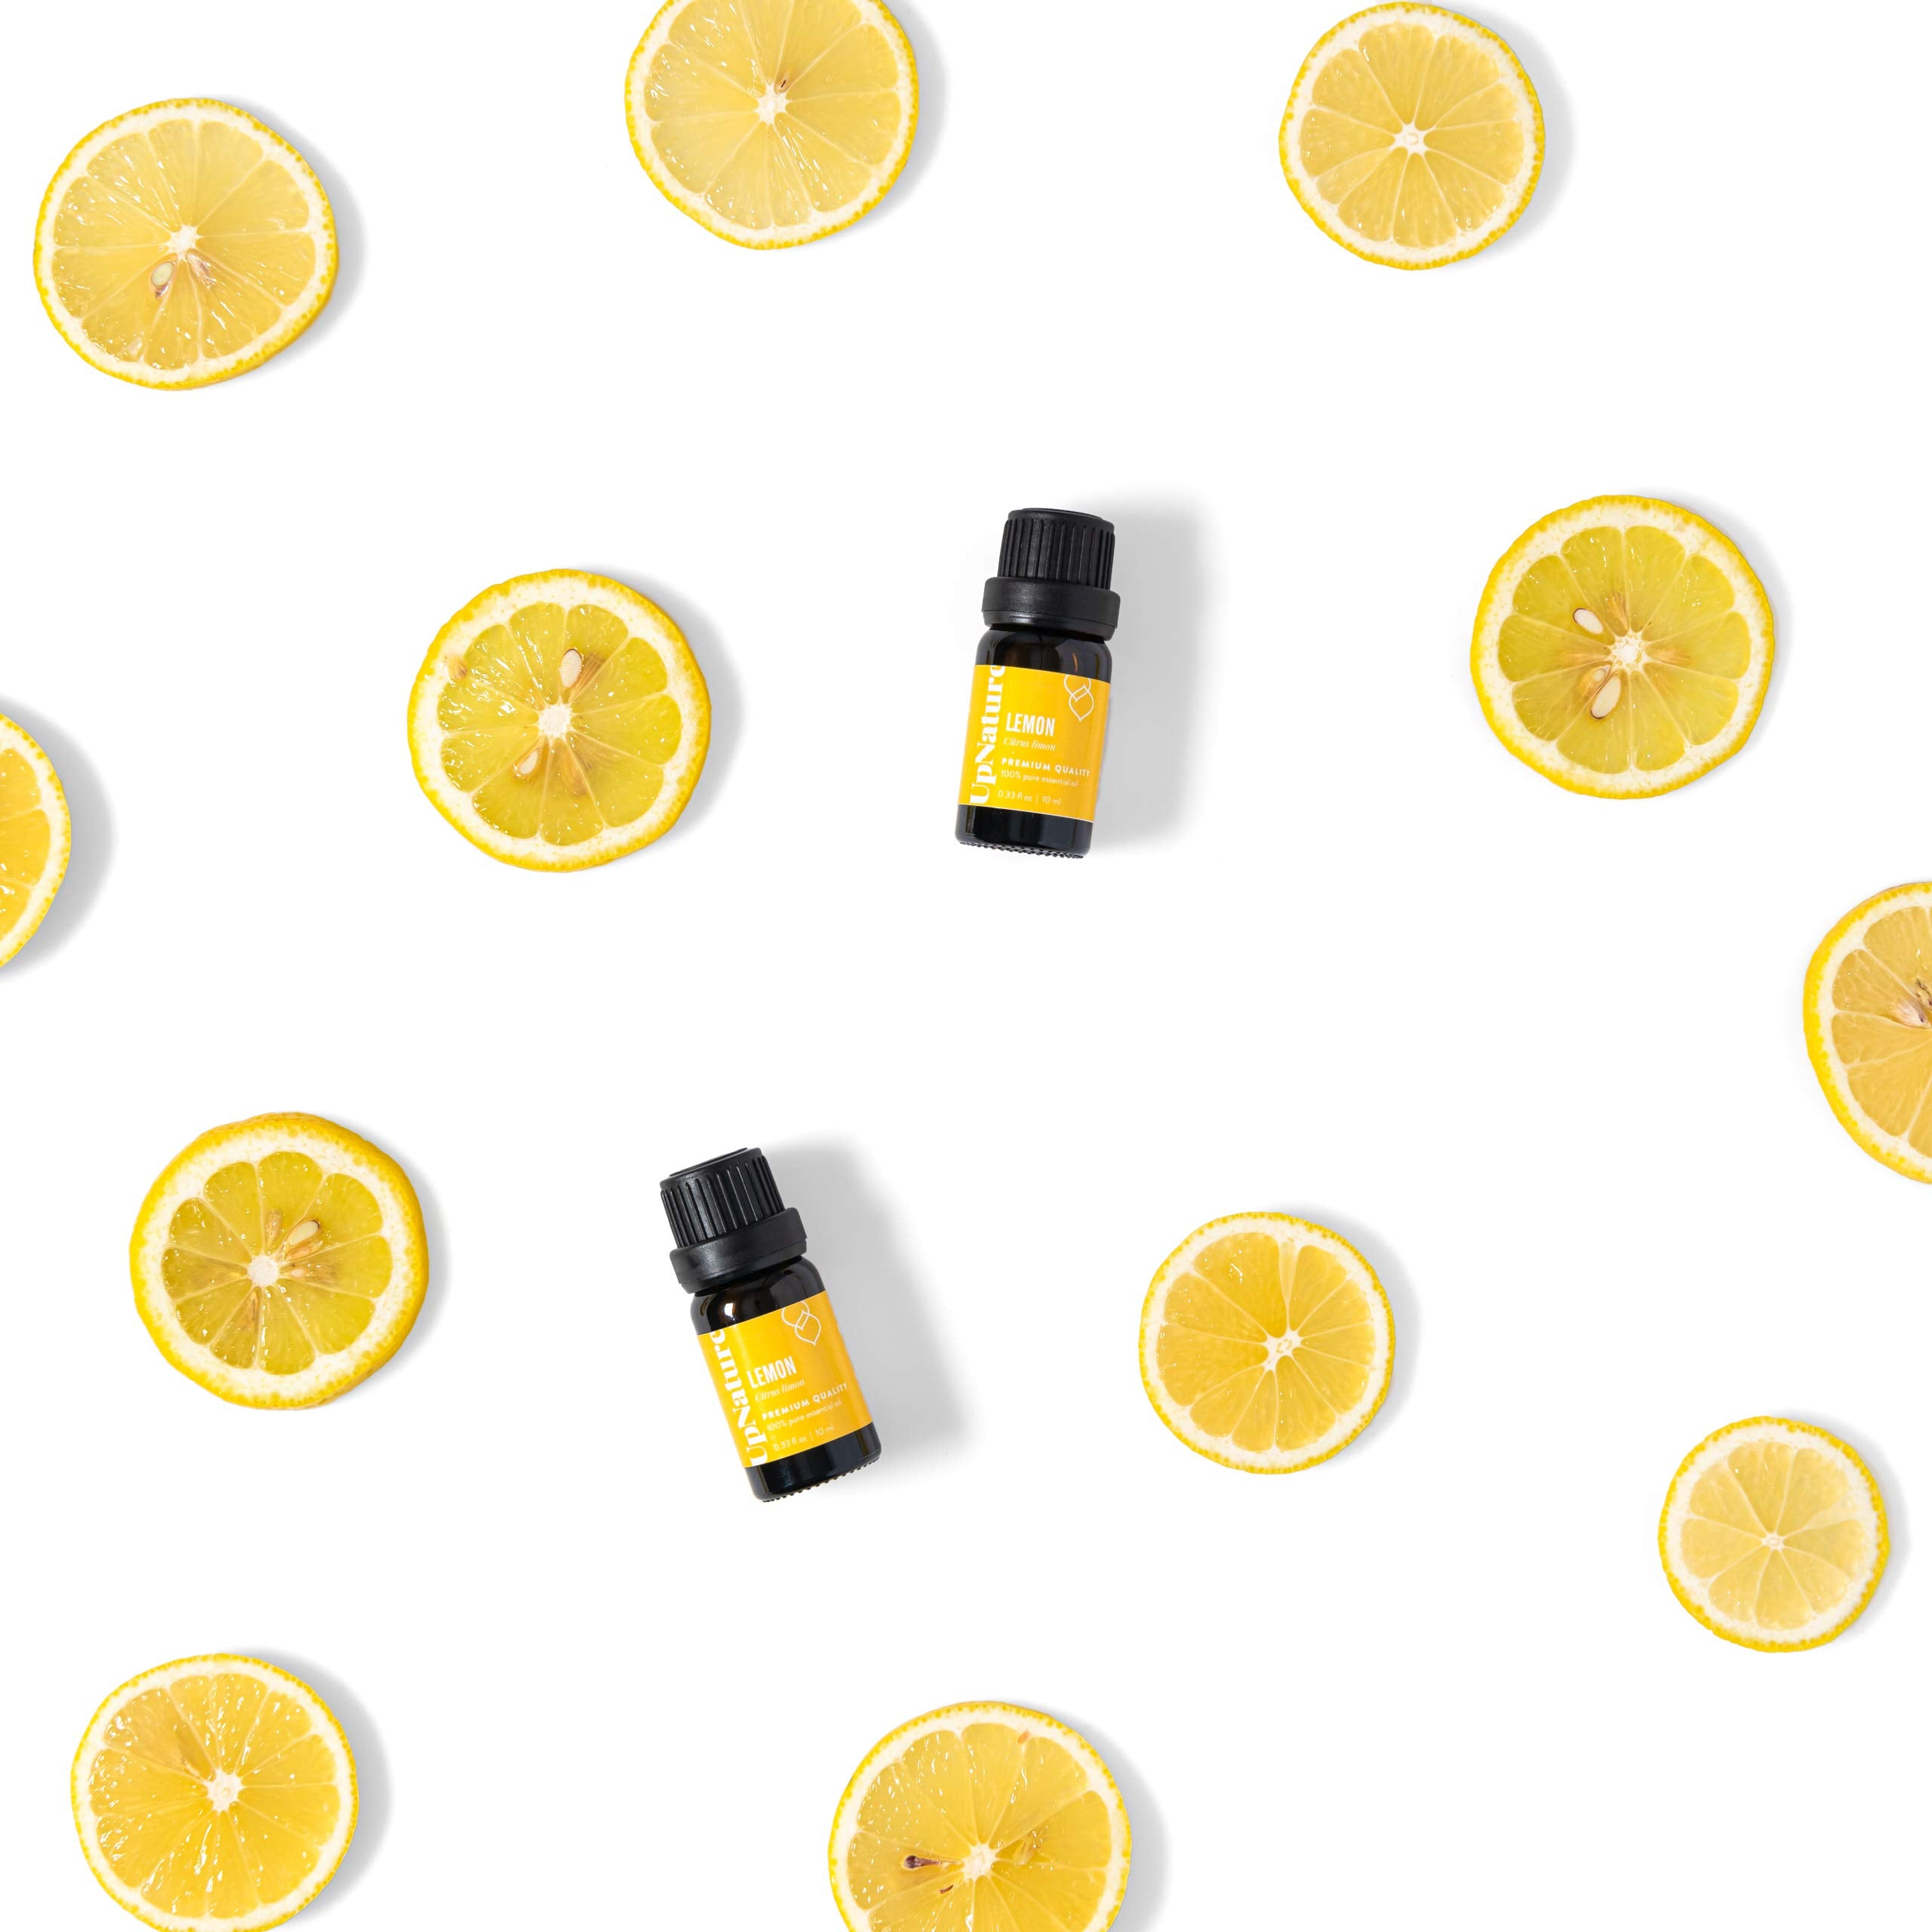 Lemon Essential Oil - 100% Pure Premium Lemon Oil - Great for Skin, Ingestion, Mood, Attention and Focus, Aromatherapy, Essential Oils Lemon Balm